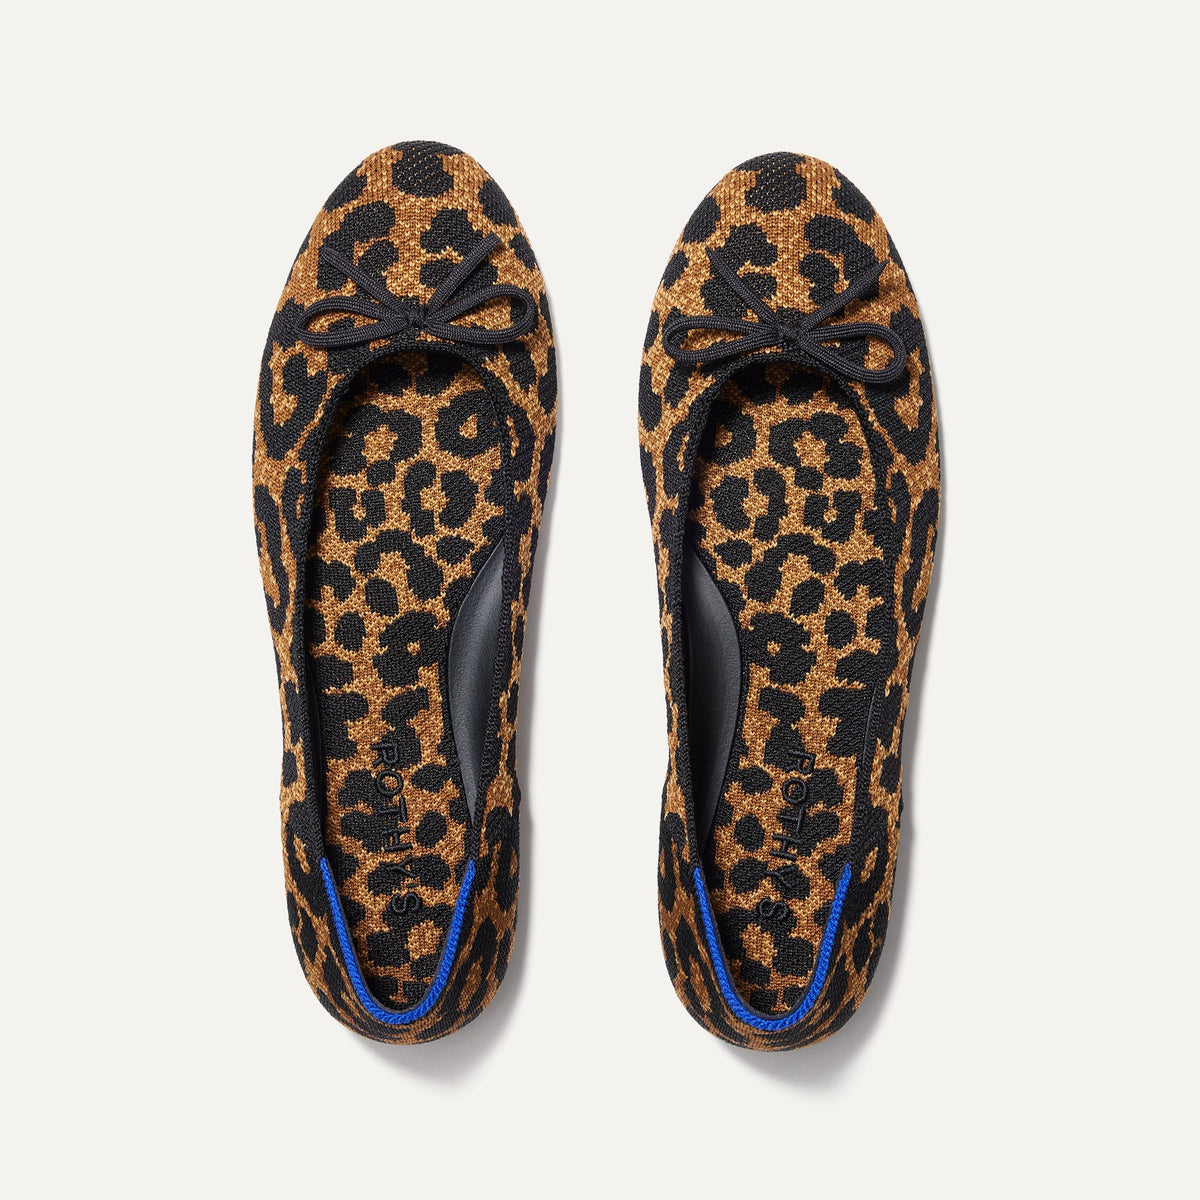 Stylish Leopard Flats and Matching Bag